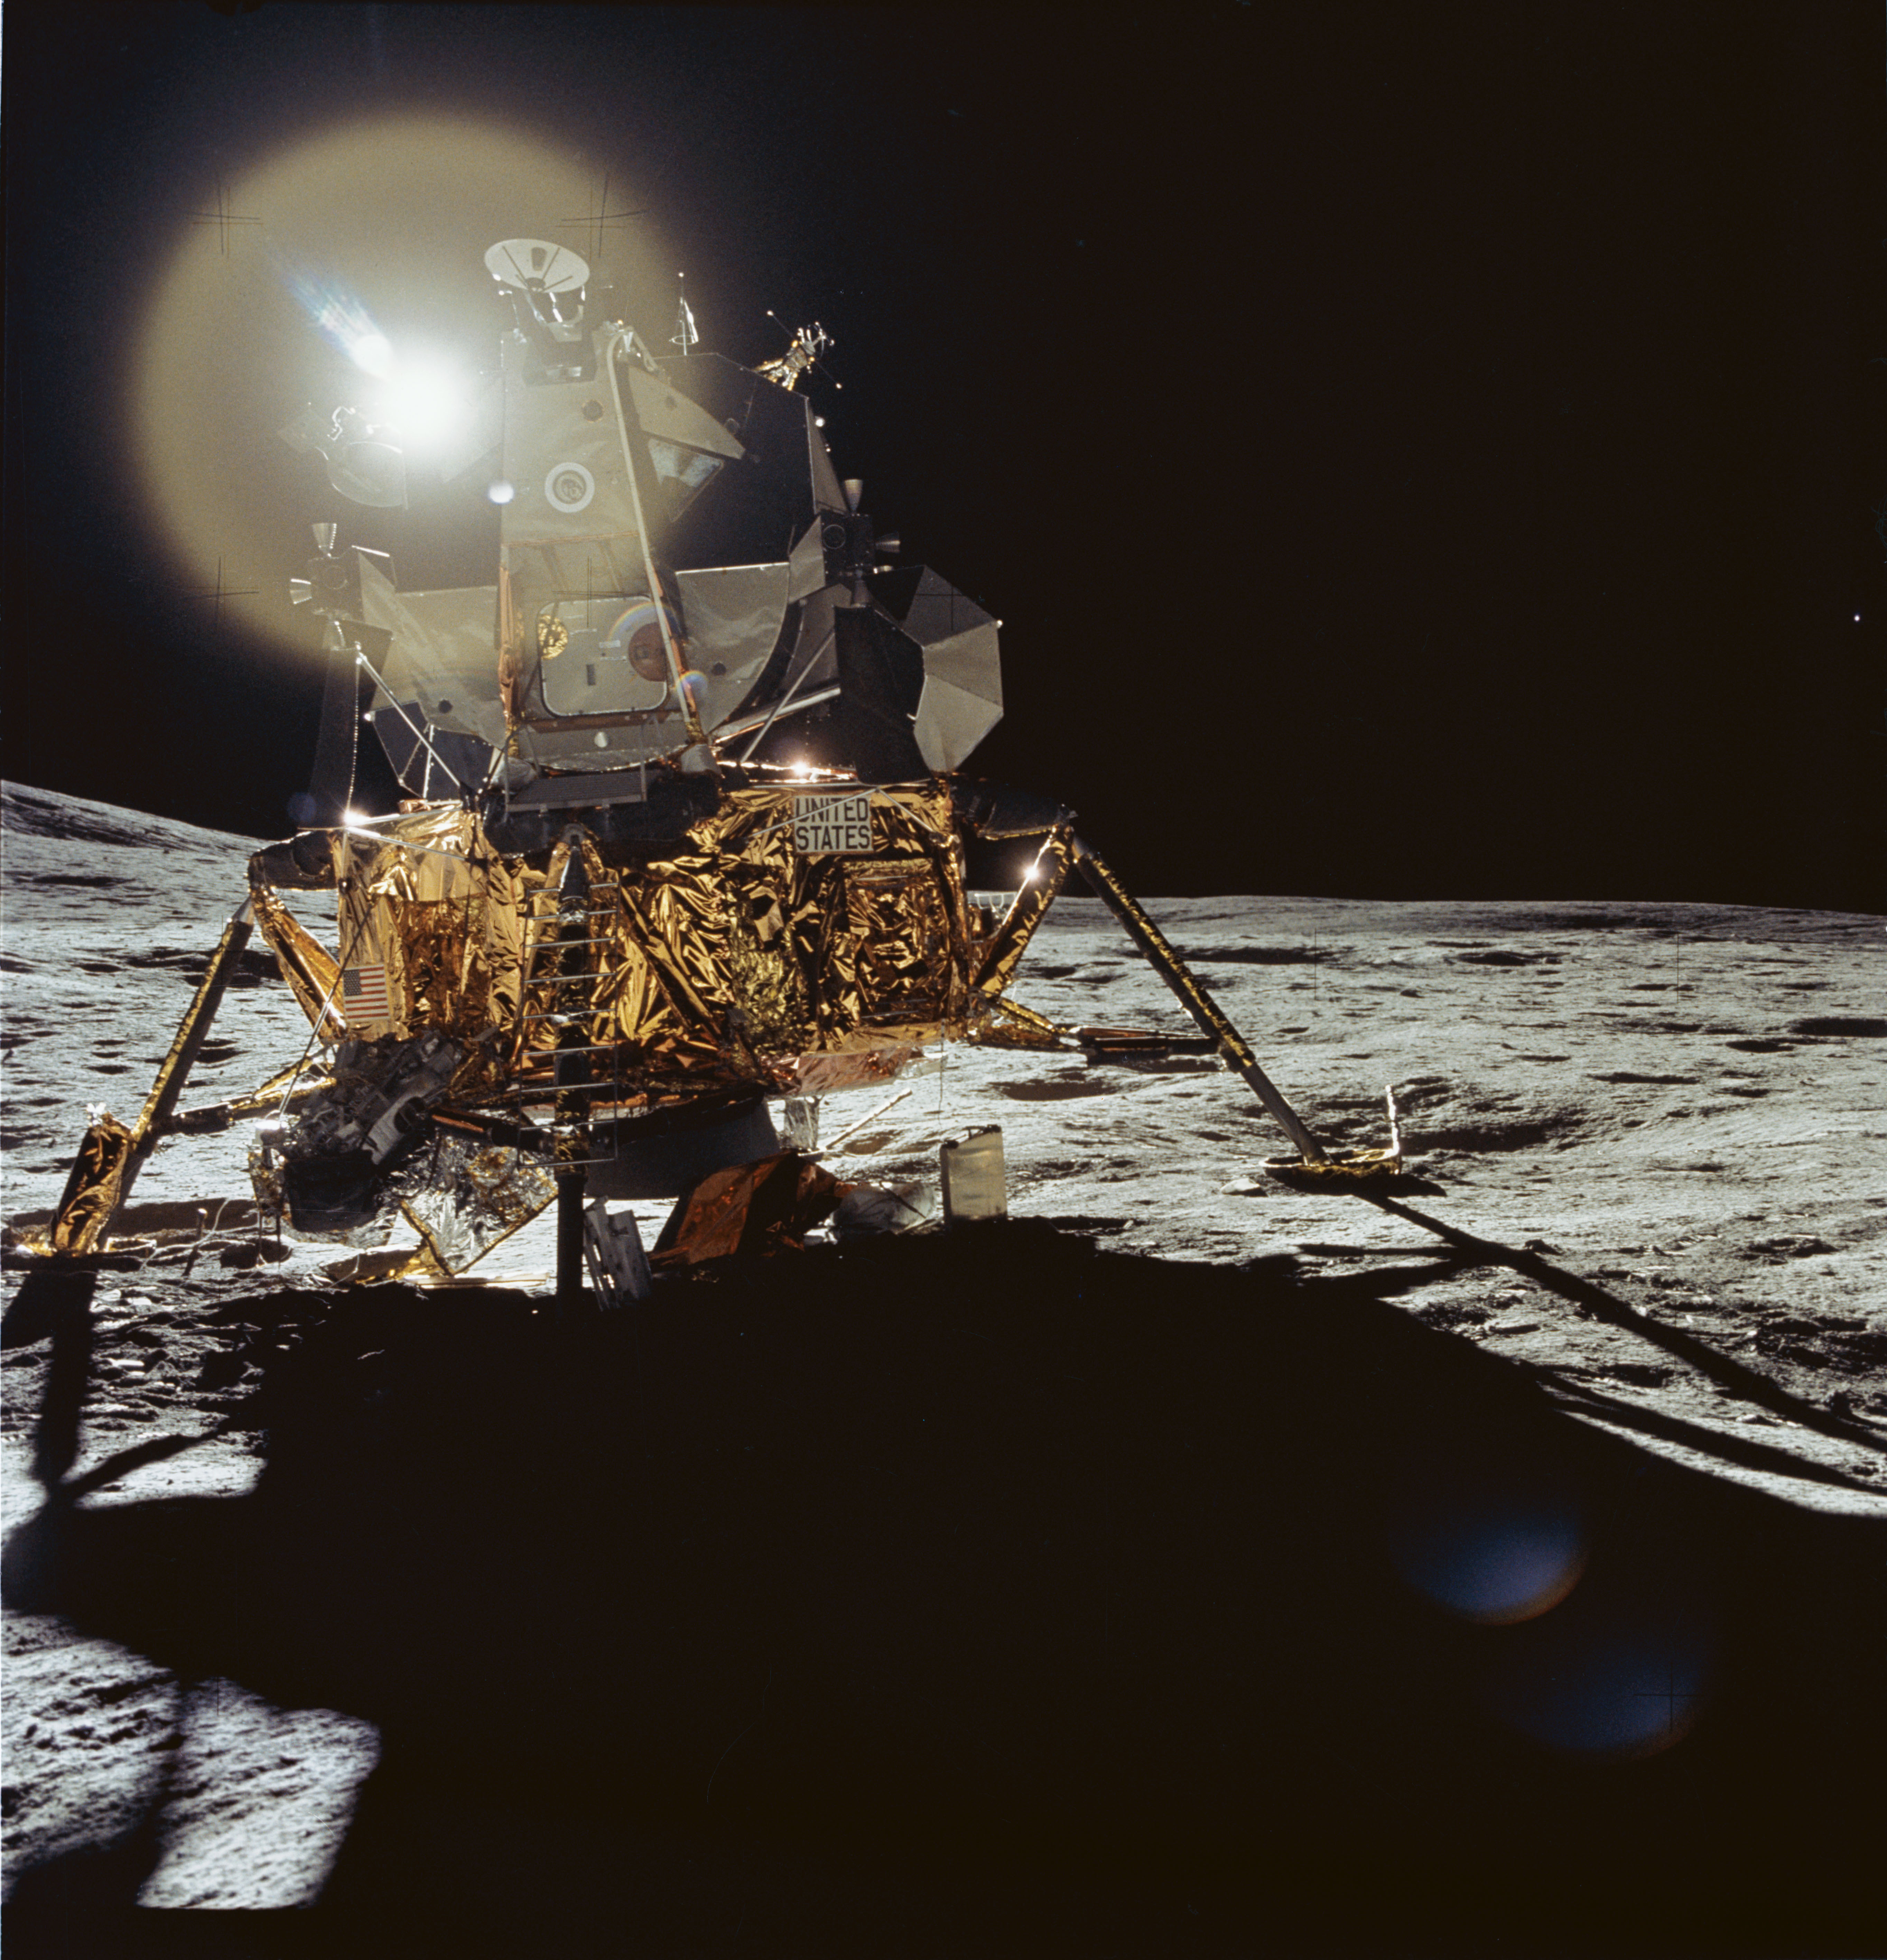 Apollo 14 Lunar Module Kitty Hawk on the surface of the Moon